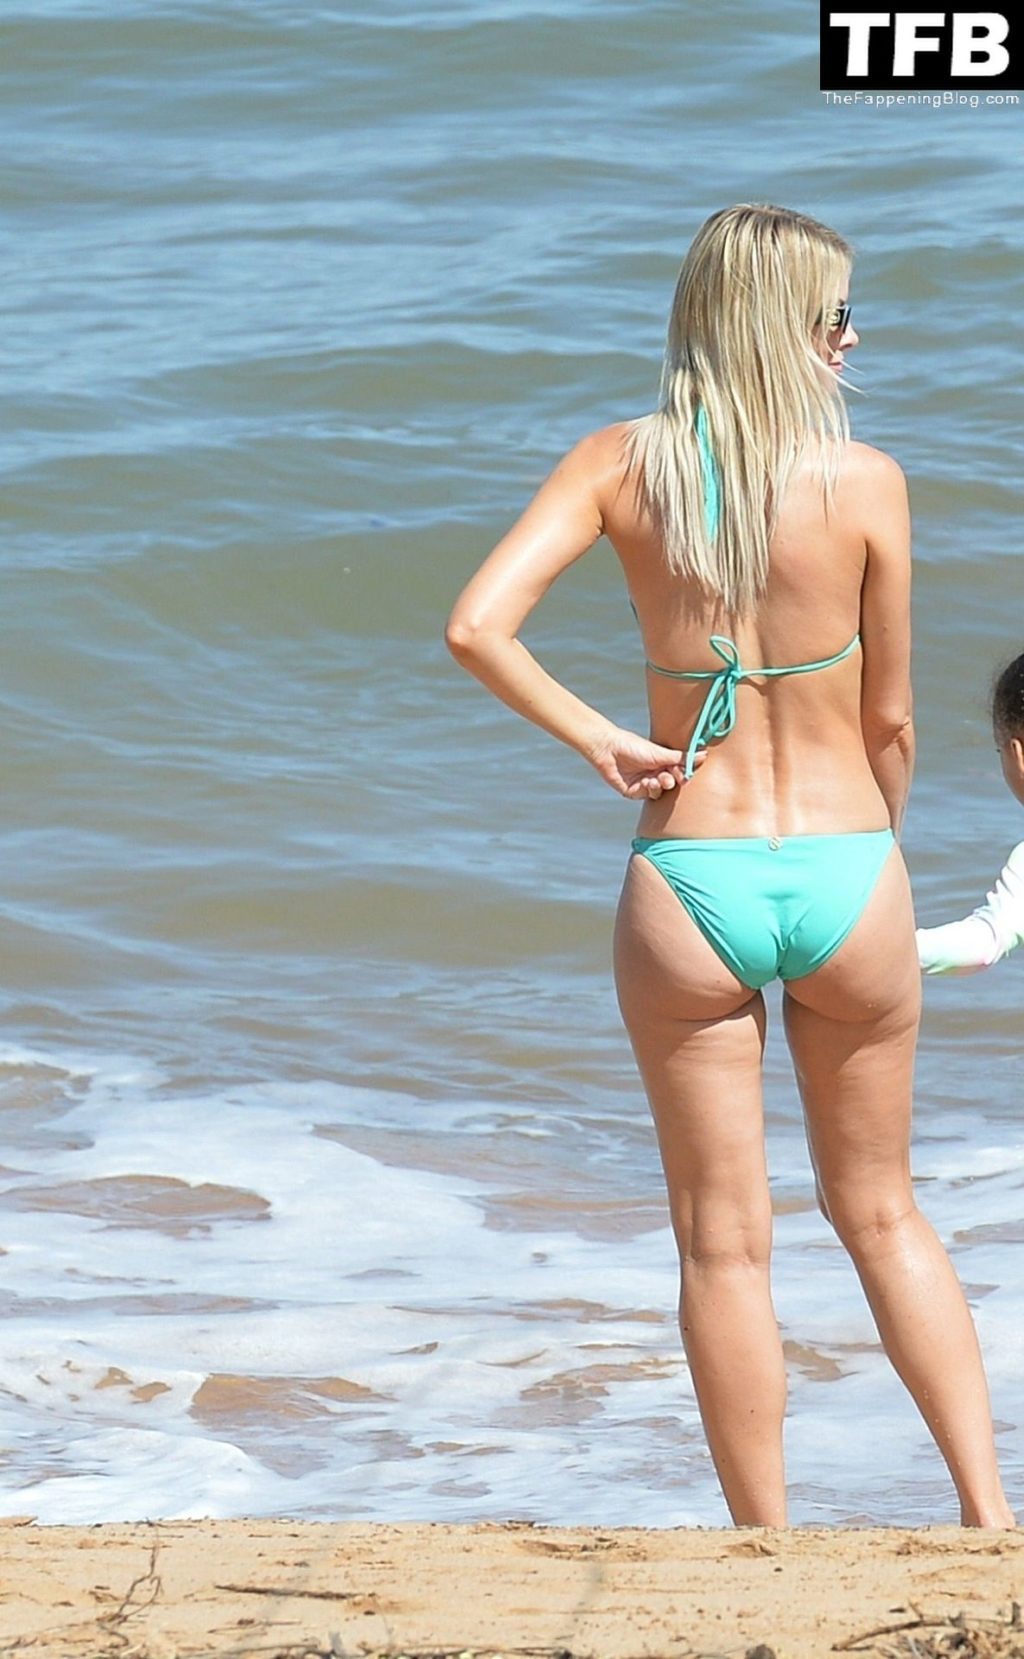 Paige Butcher Looks Stunning in a Bikini on the Beach in Hawaii (10 Photos)